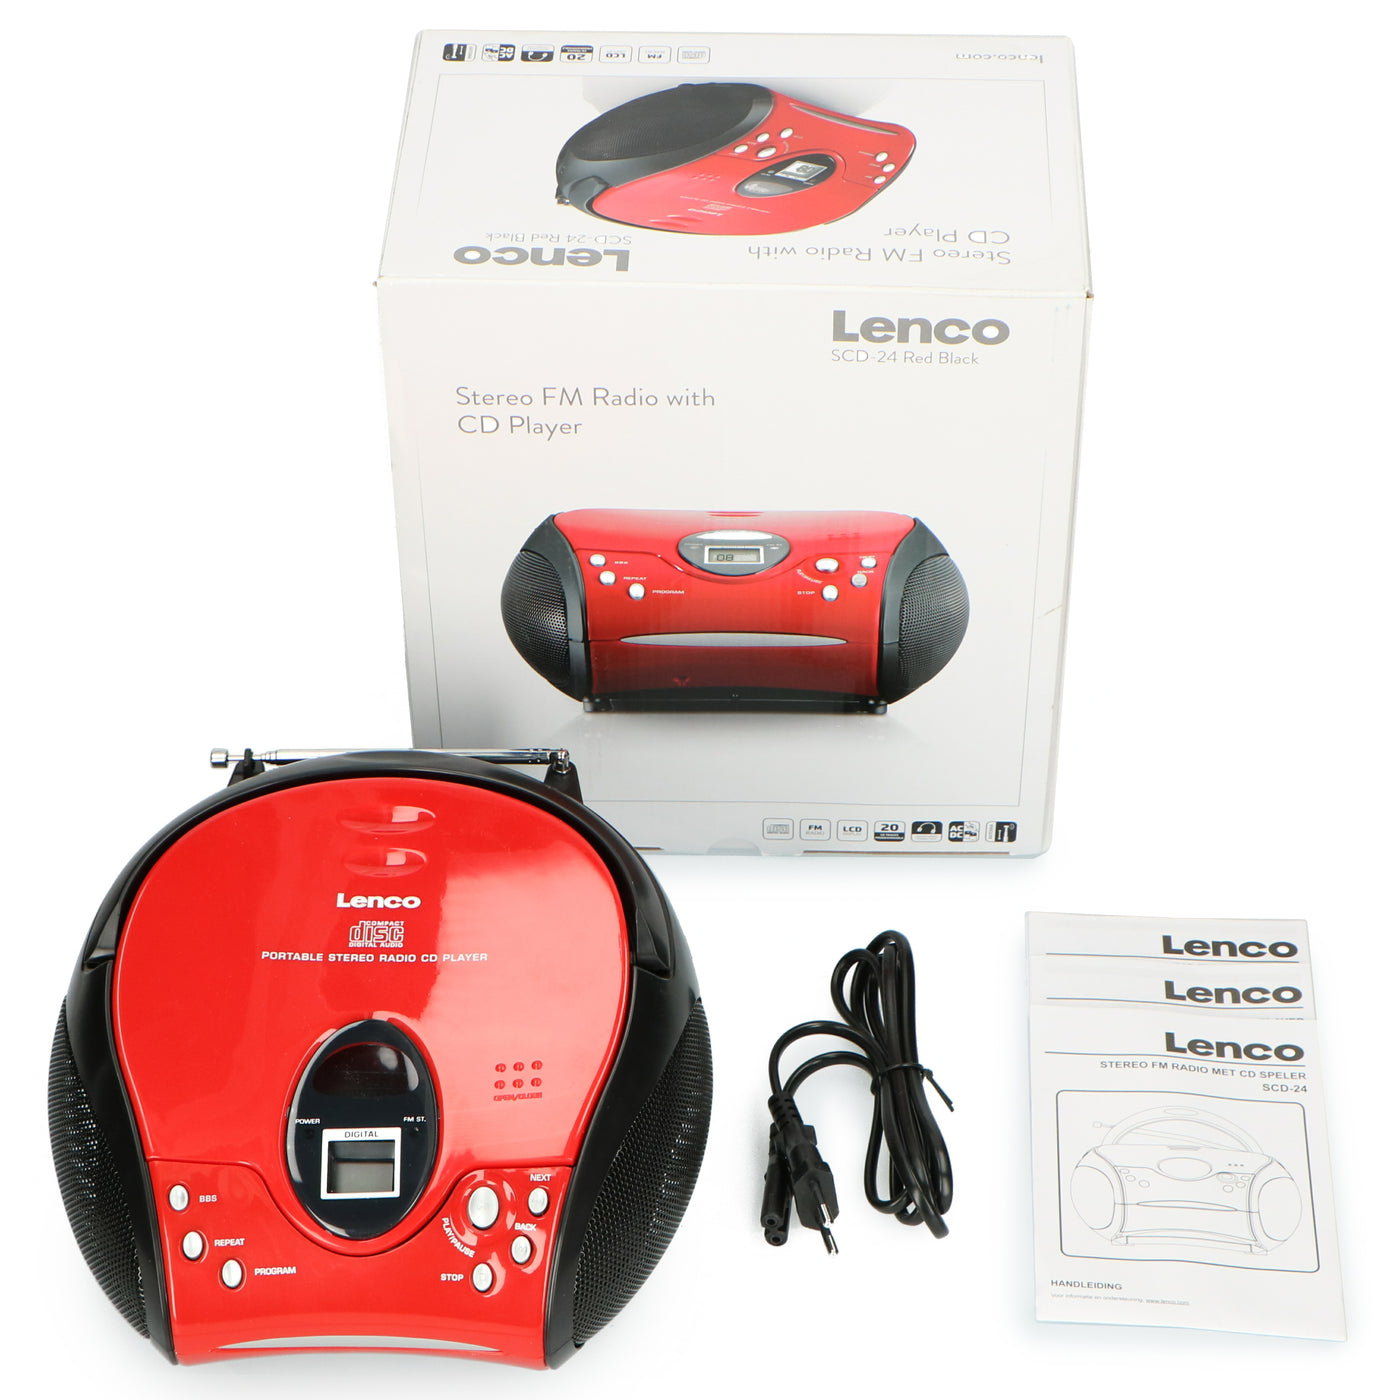 FM SCD-24 LENCO Lenco-Catalog stereo radio Red – - CD Red/Black player Portable - with